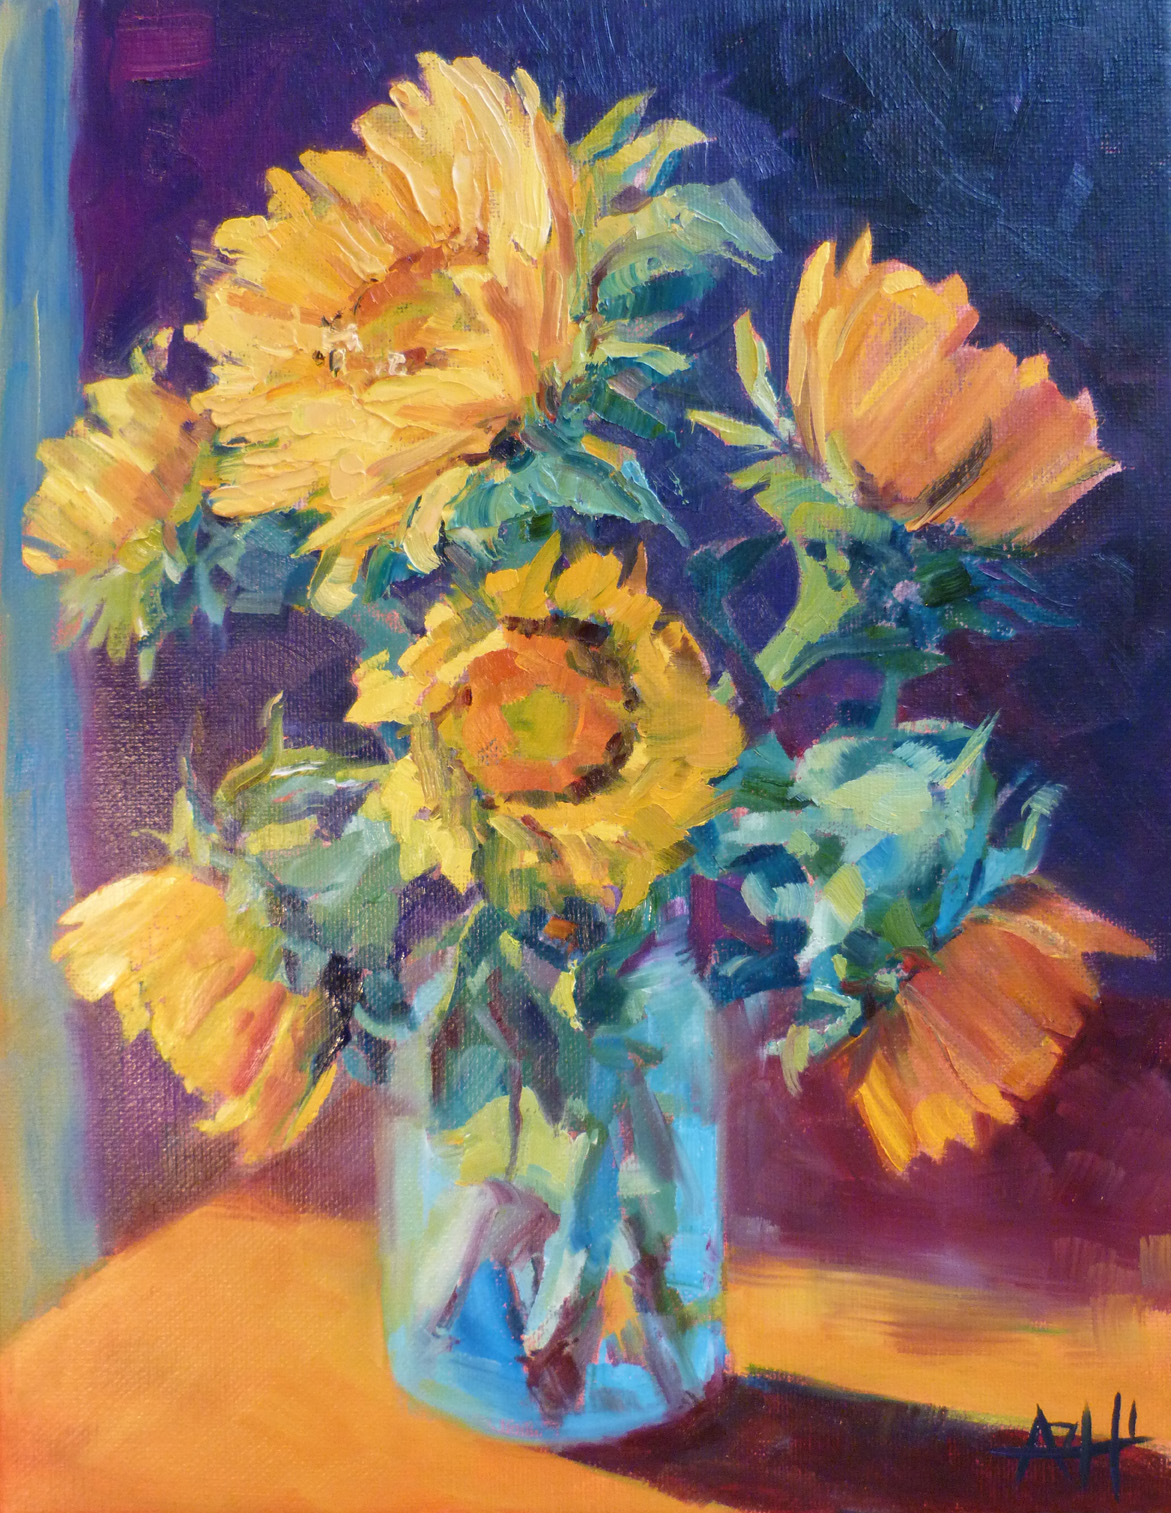 SOLD, Sunflowers in the Light, Copyright 2014 Hirschten, Oil on Canvas 11" x 14"